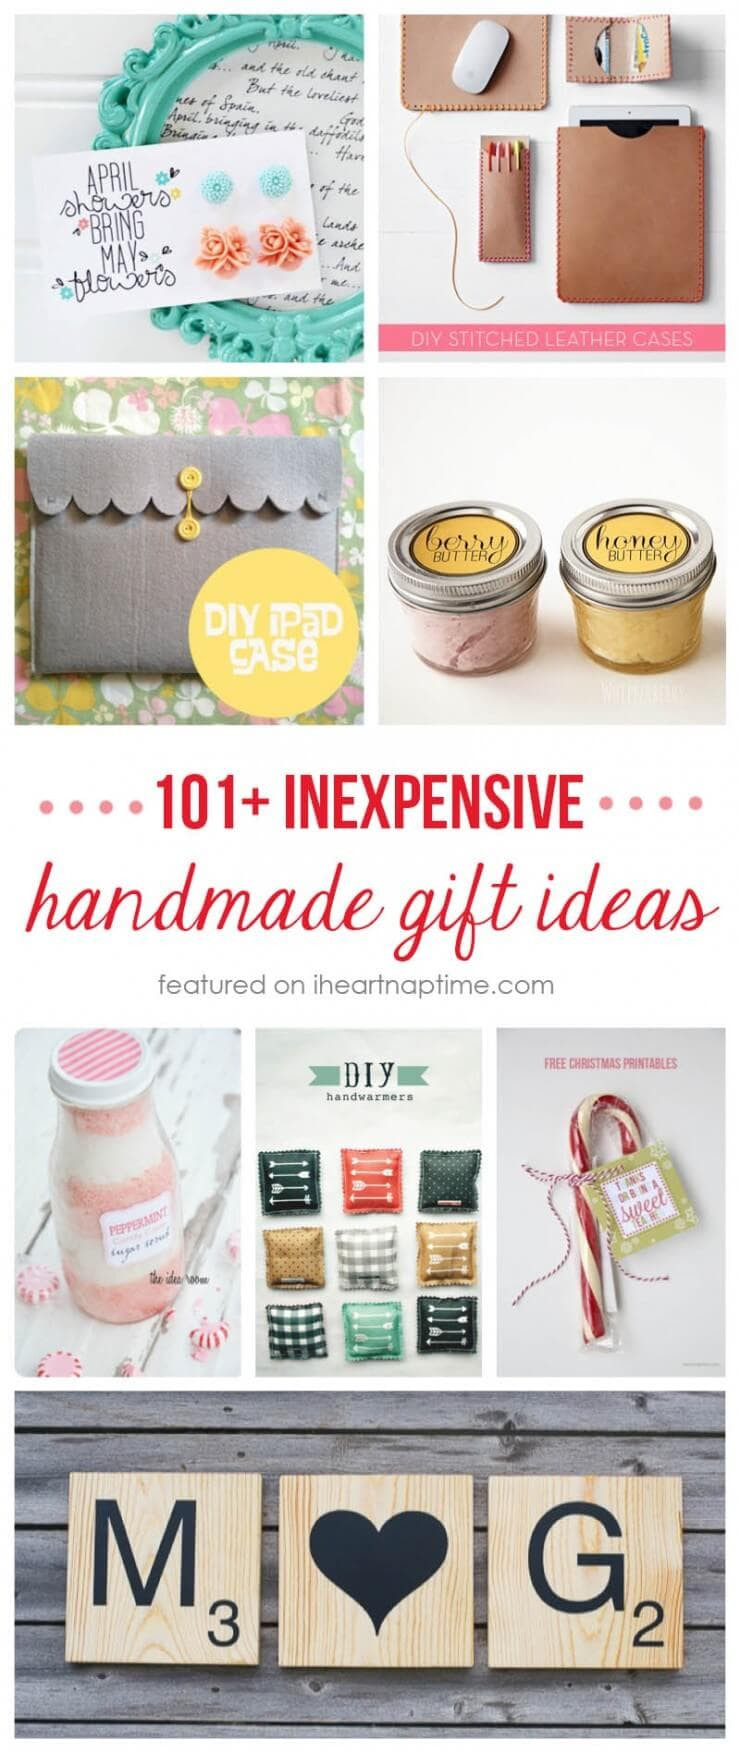 Handmade Christmas Gift Ideas
 50 homemade t ideas to make for under $5 I Heart Nap Time